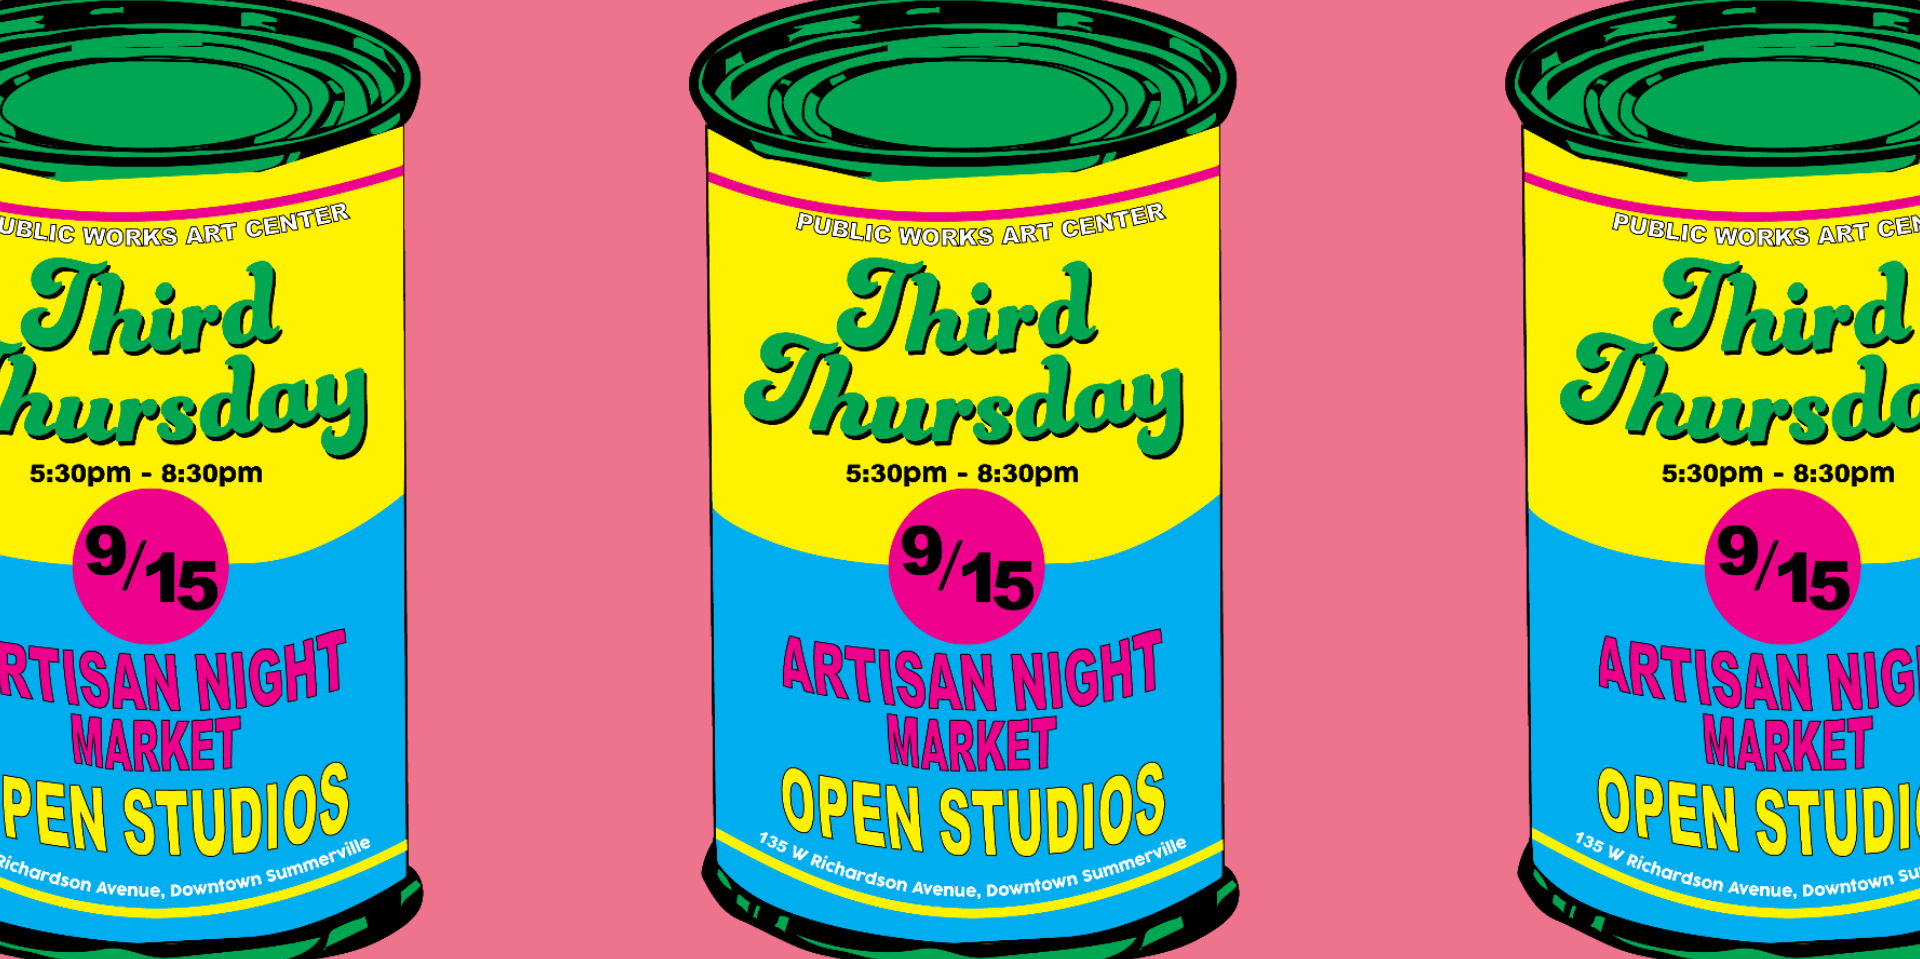 Third Thursday/Open Studios/Artisan Market at Public Works Art Center  promotional image